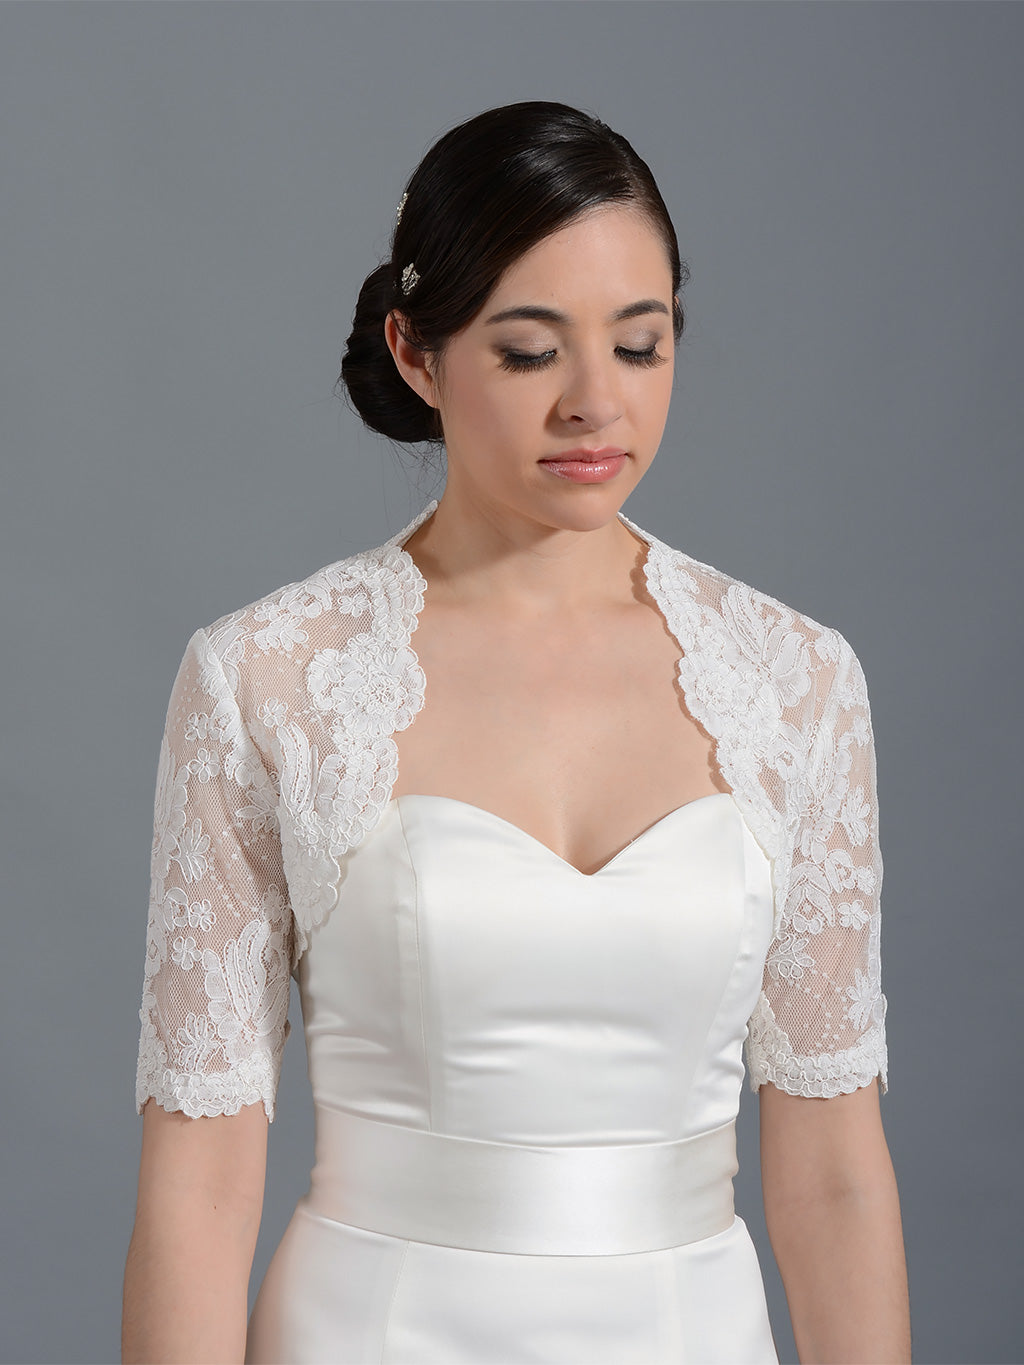 Elbow sleeve bridal alencon lace bolero jacket - Lace_078